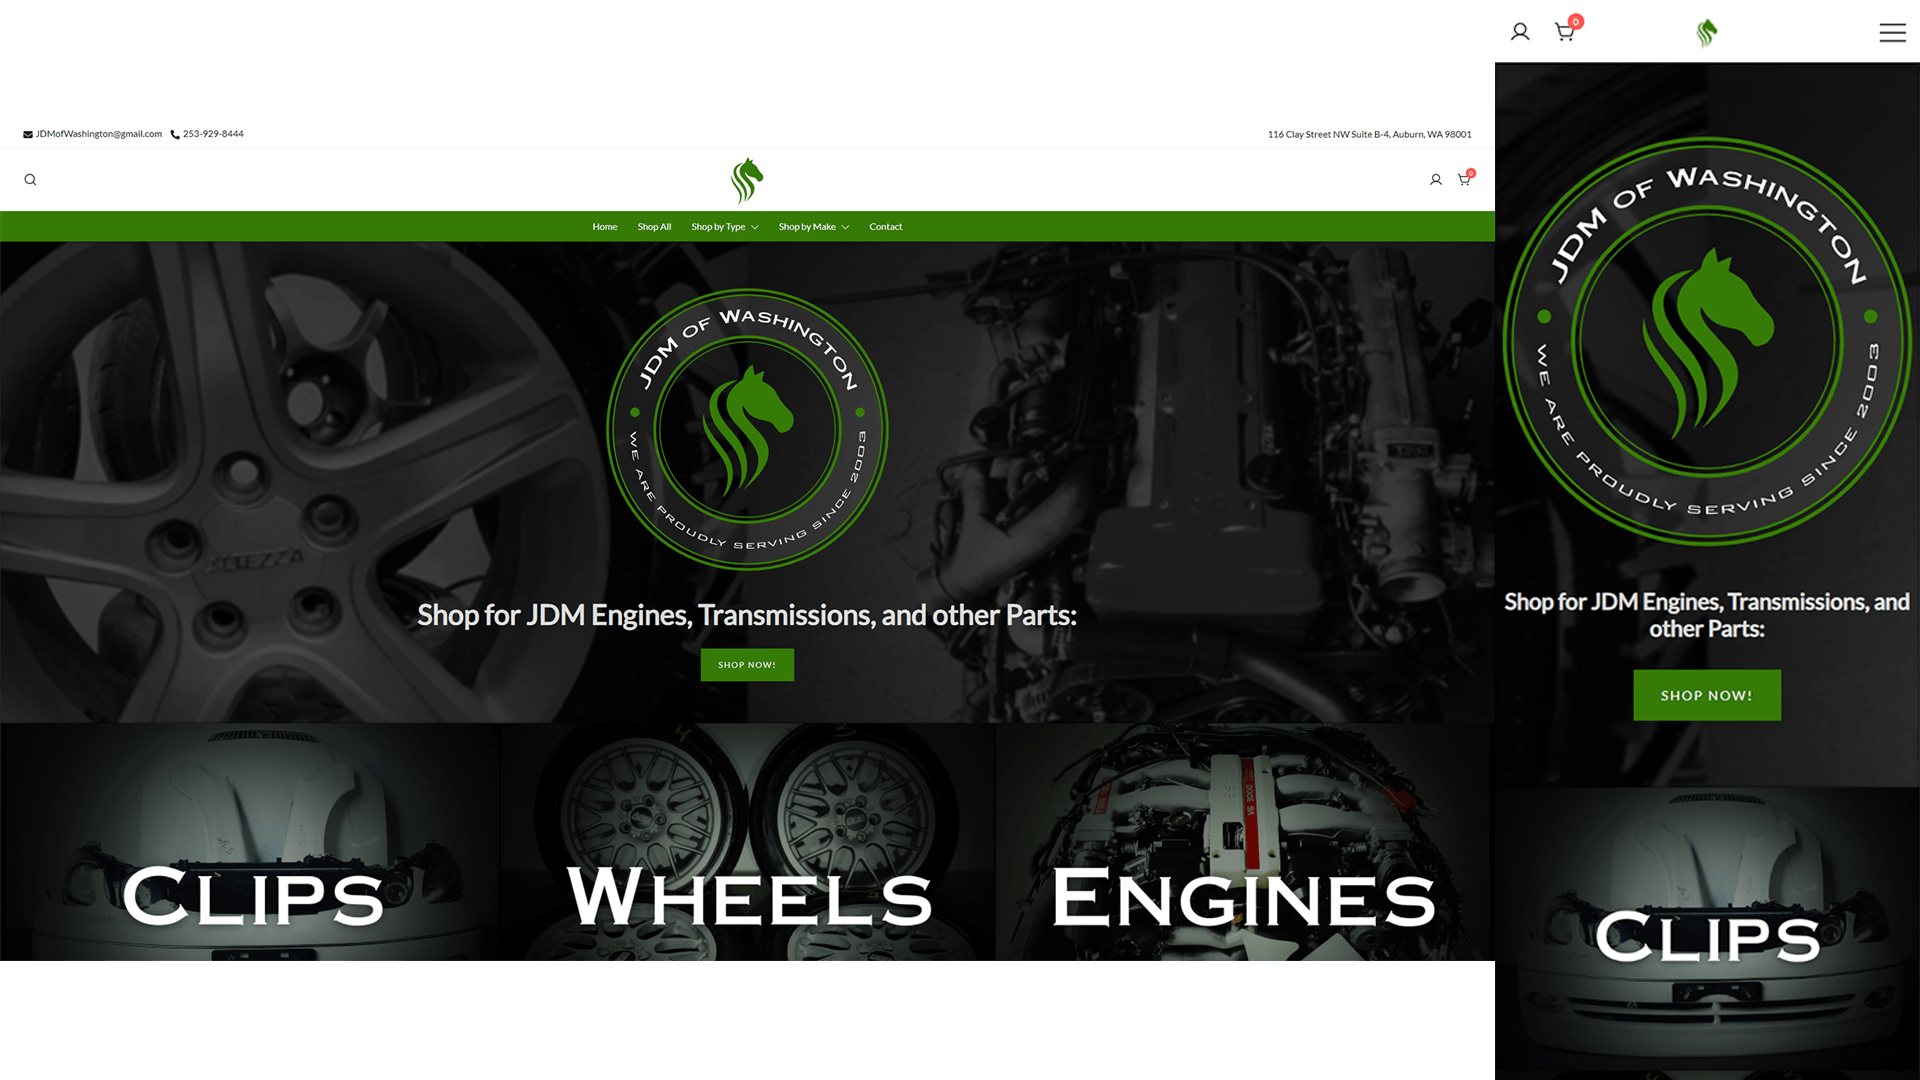 JDM of Washington – Desktop and mobile device screenshots of the homepage/main webpage